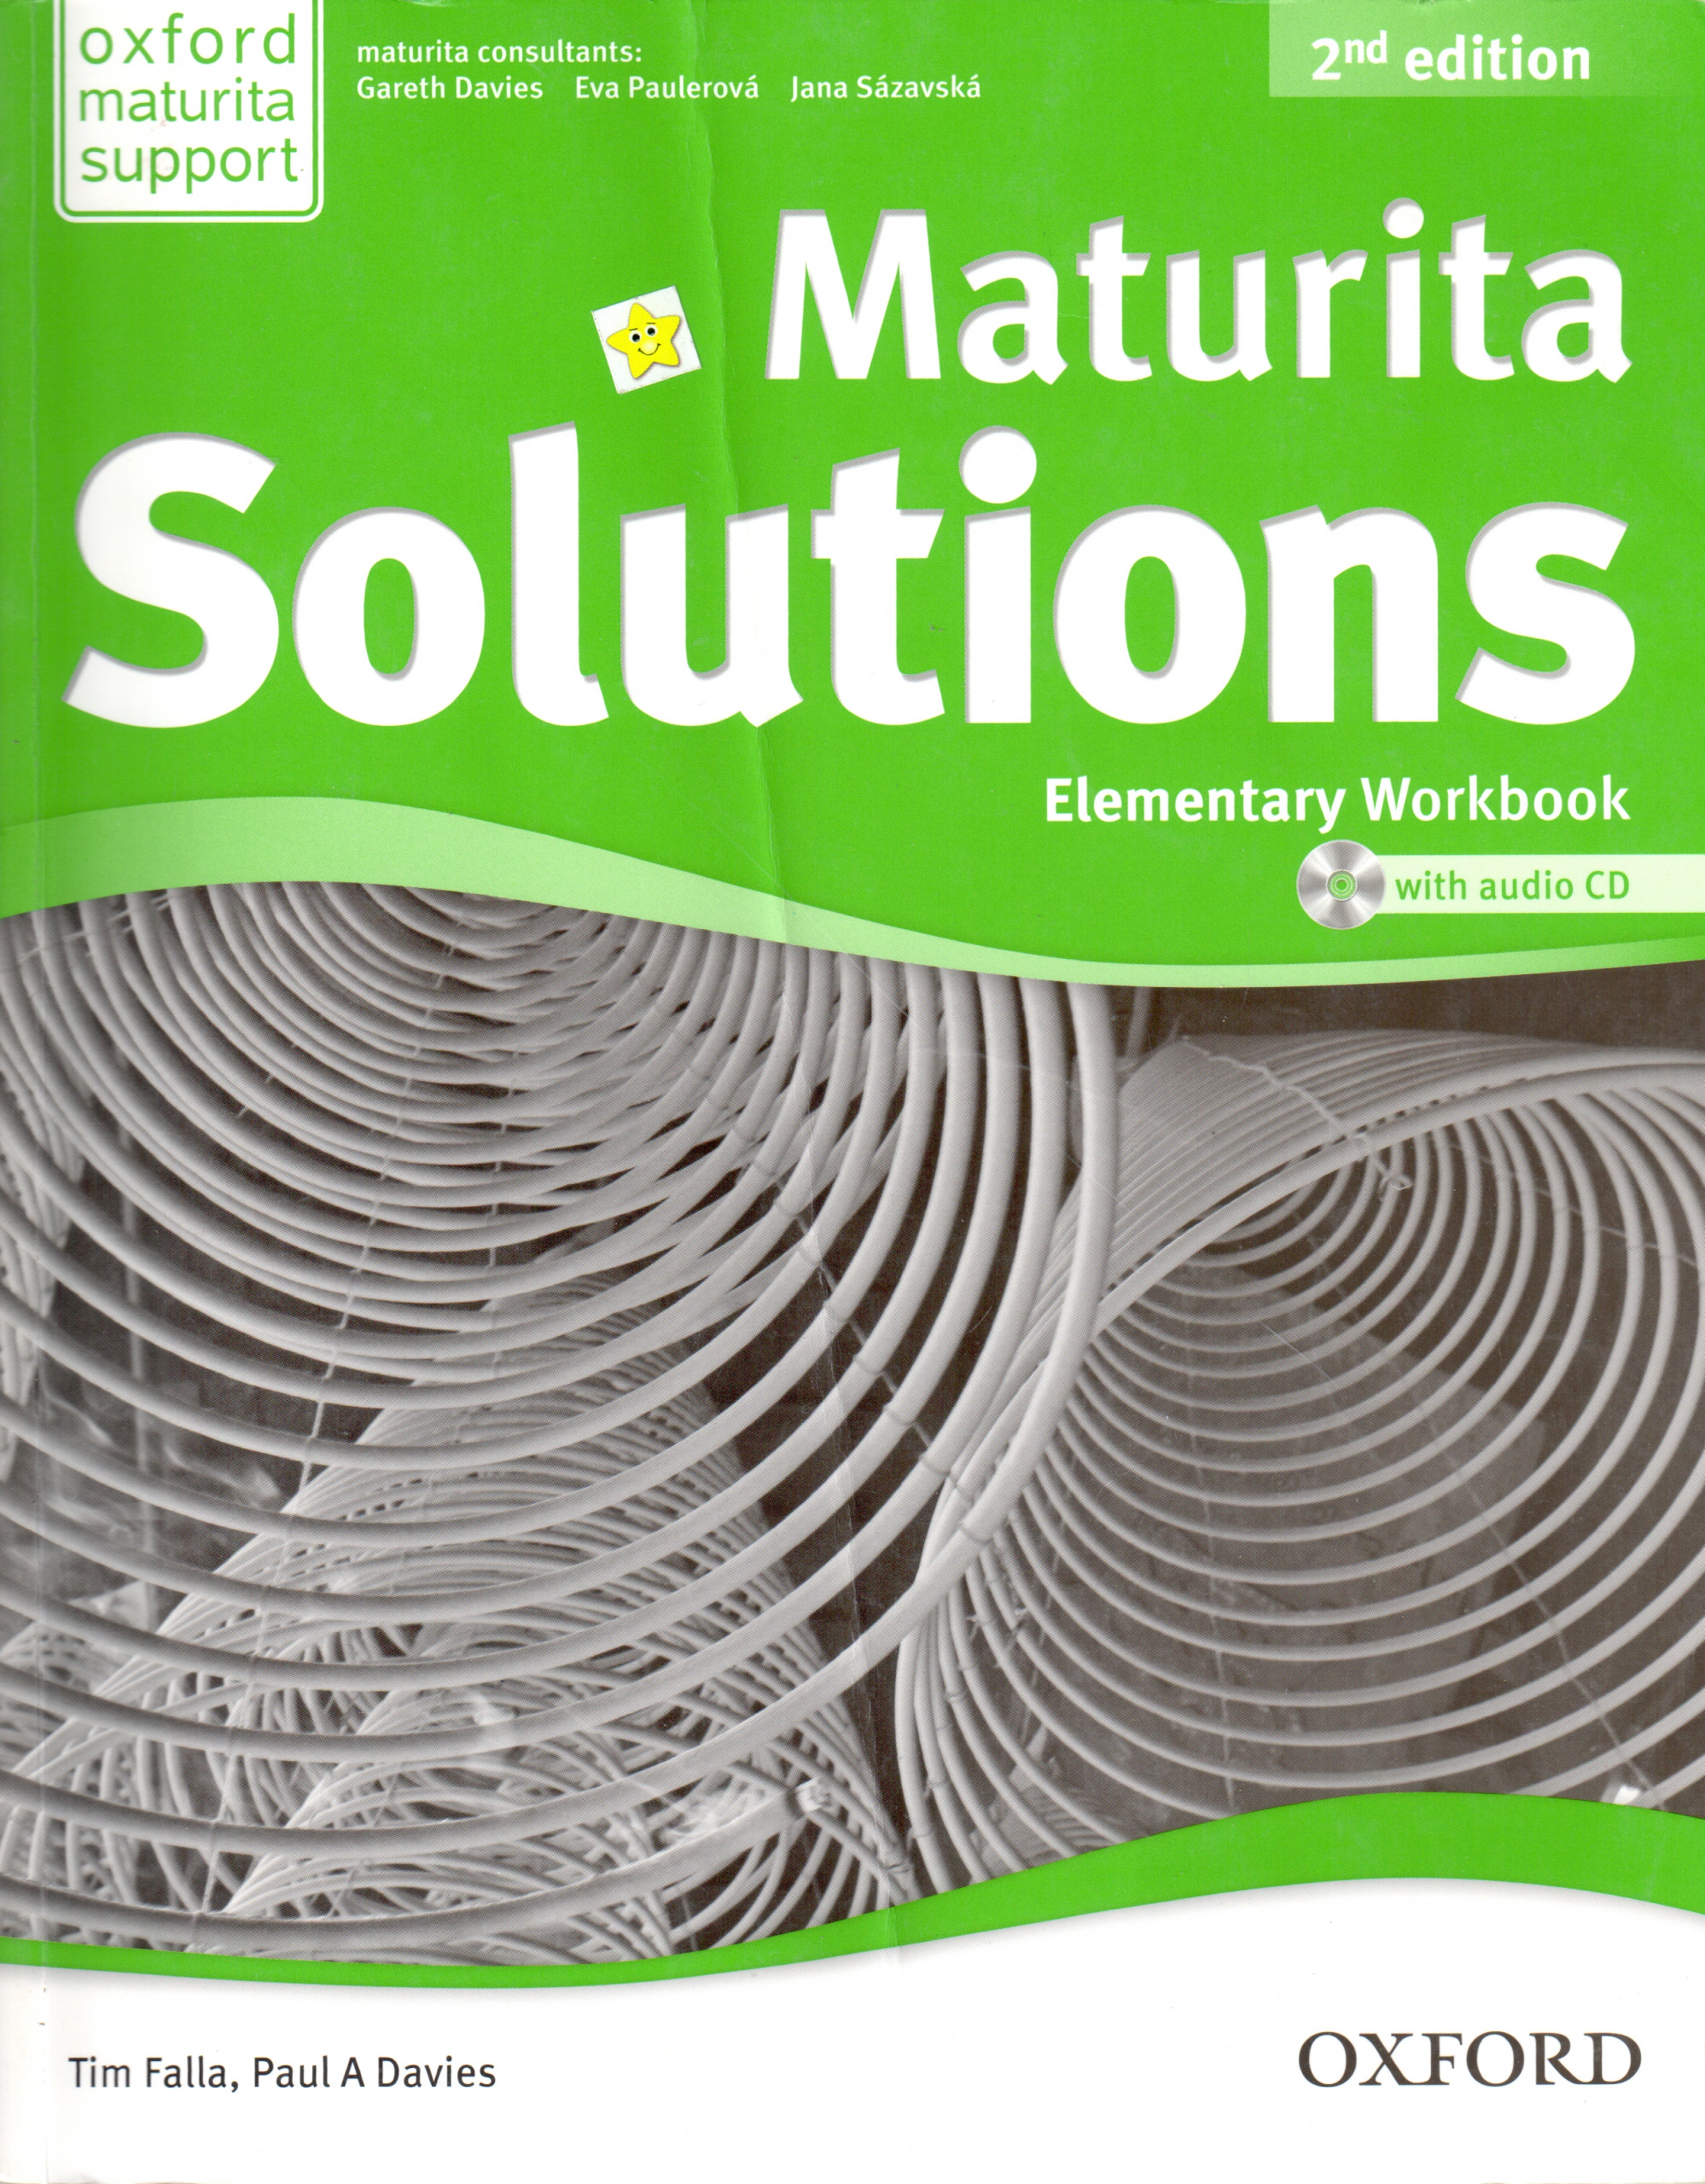 Maturita Solutions : Elementary Workbook (2nd edition) (+CD) - Náhled učebnice